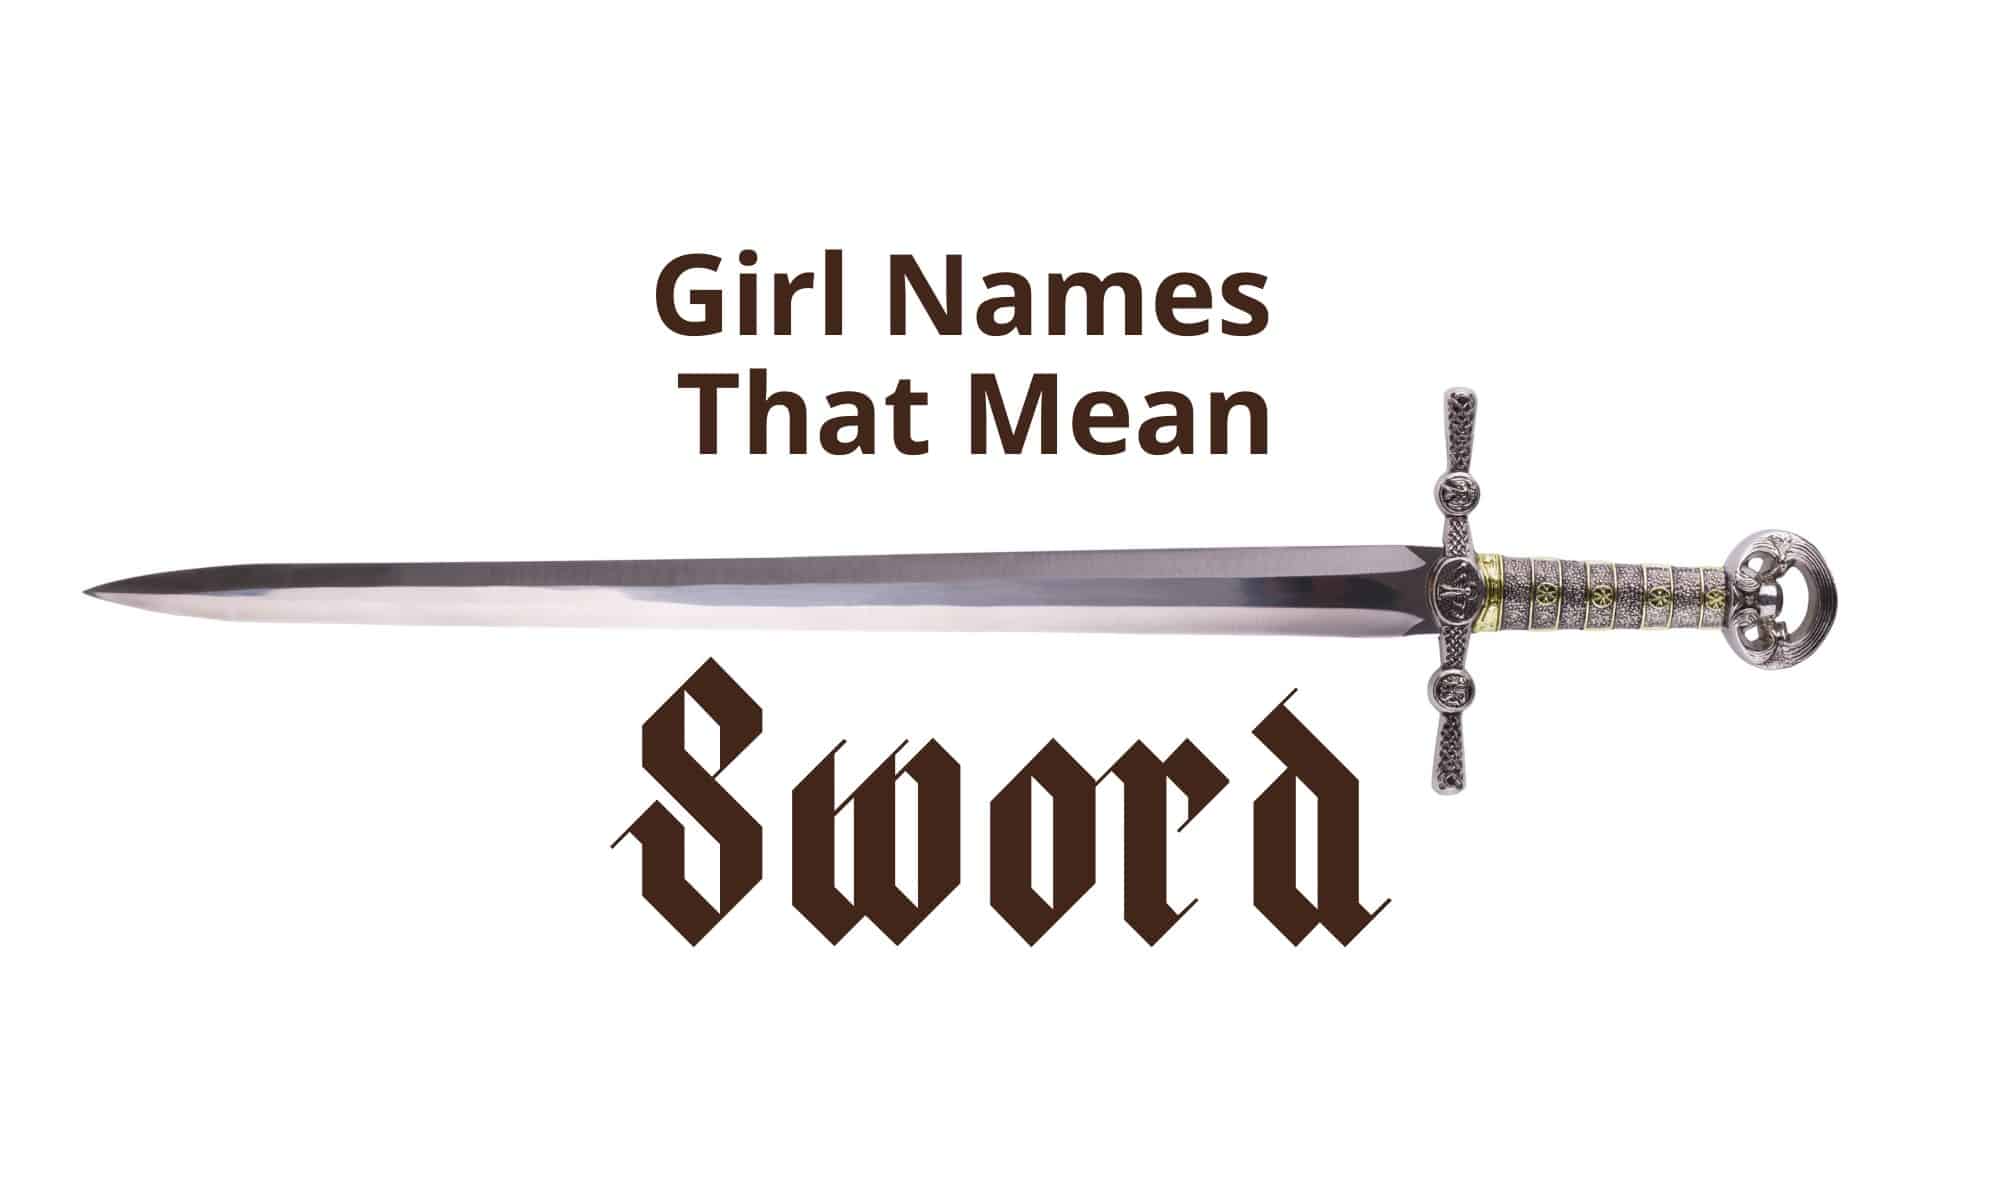 girl names that mean sword